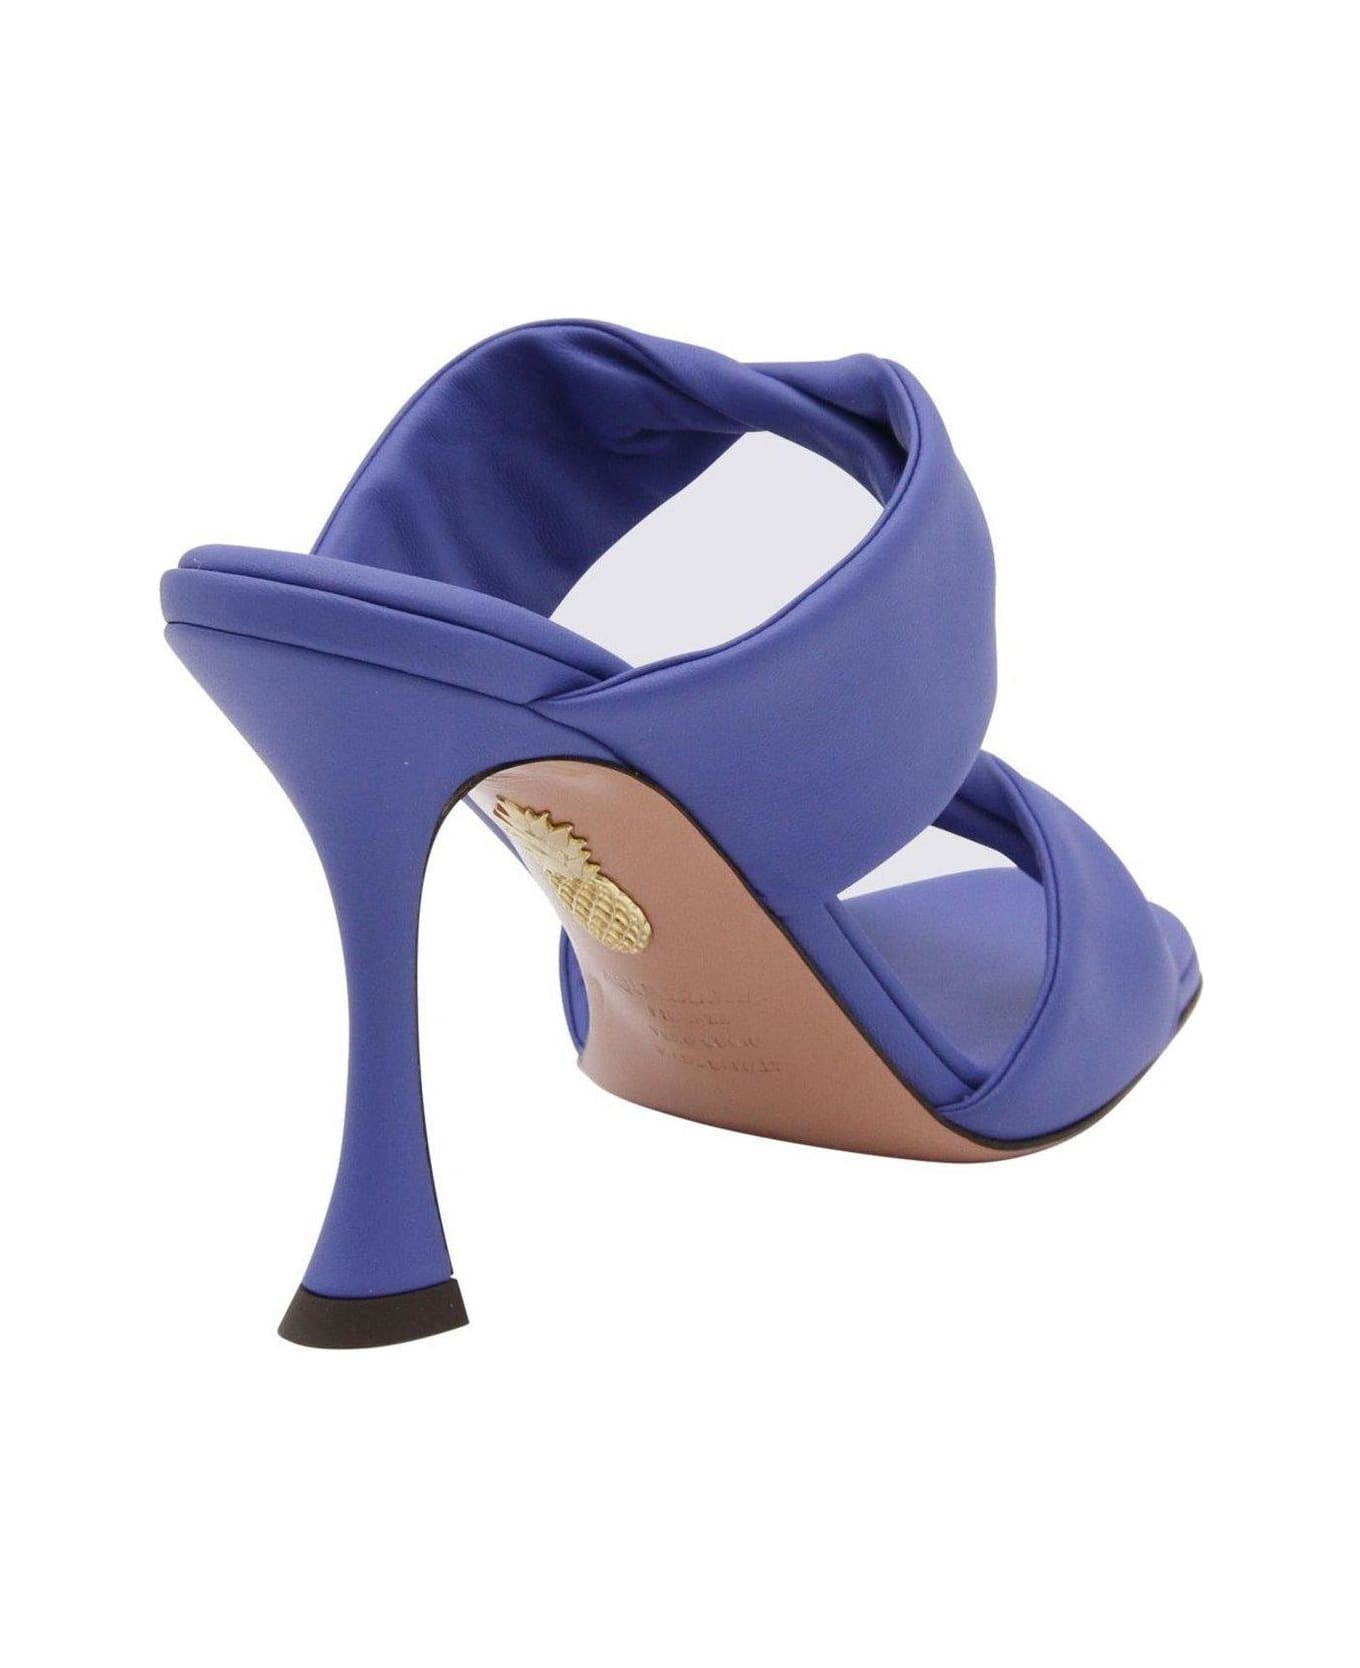 Aquazzura Twist 95 Sandals - BLUE